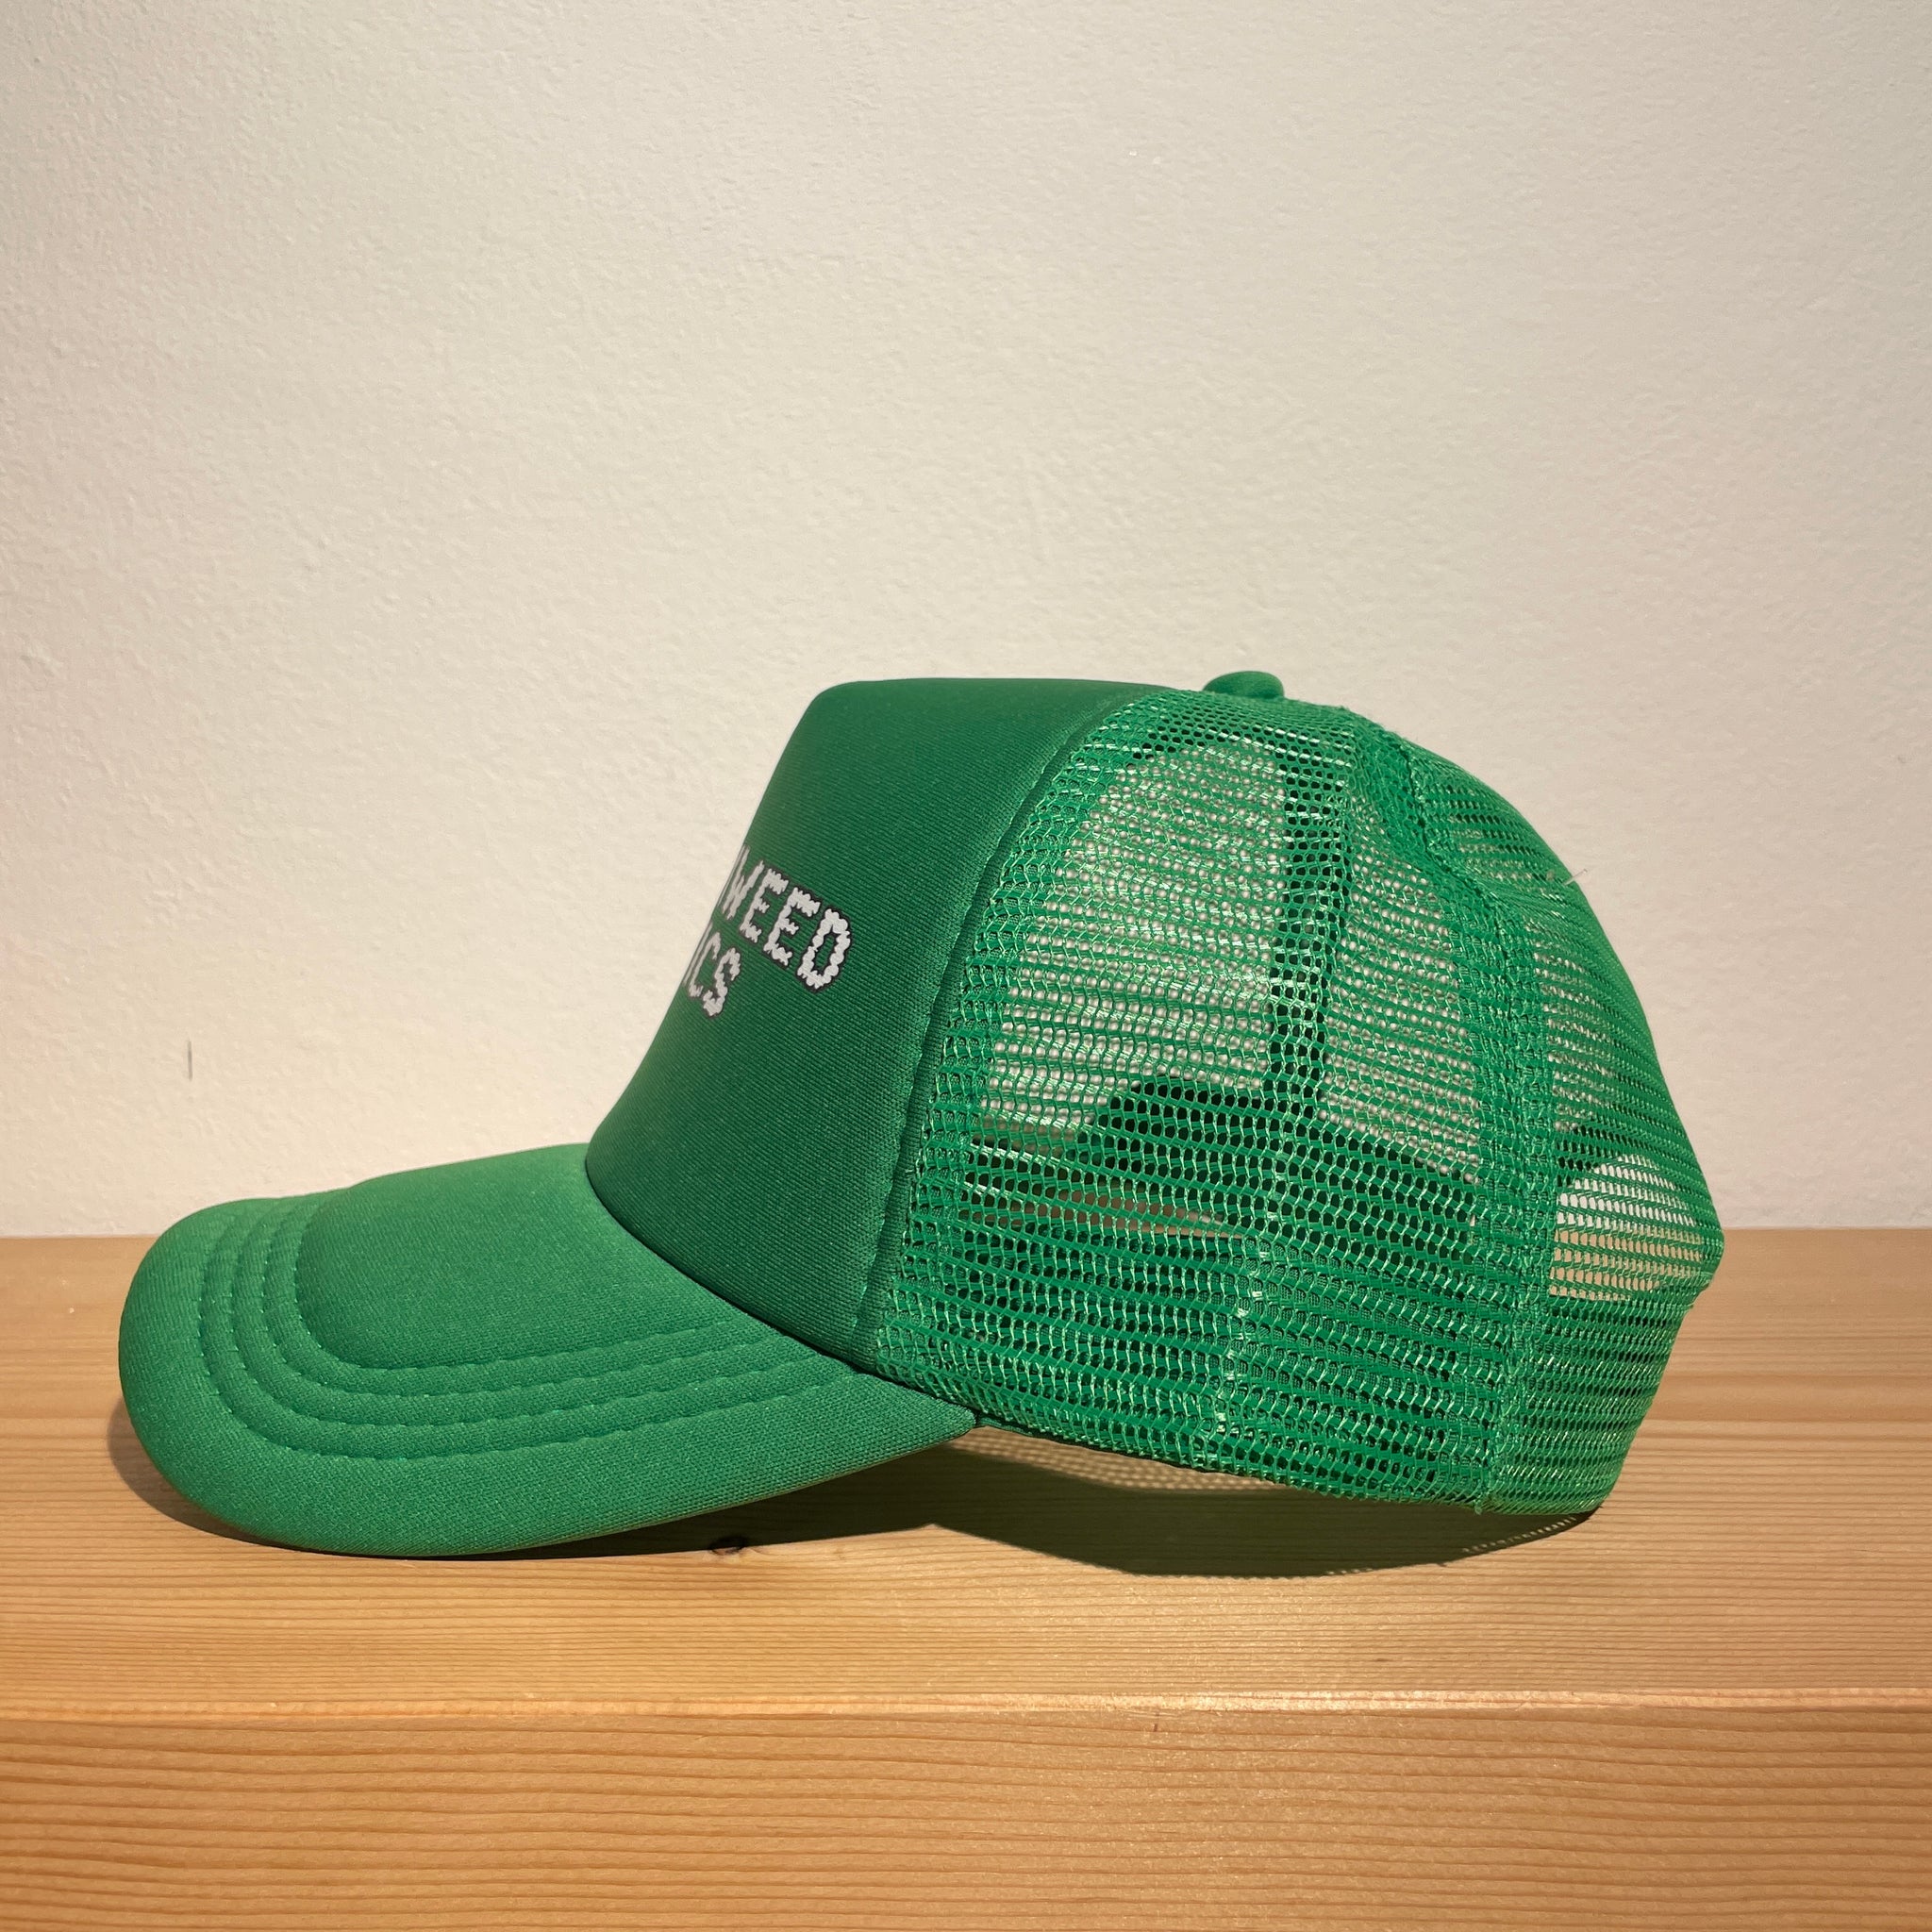 SUKHUMWEED CAP